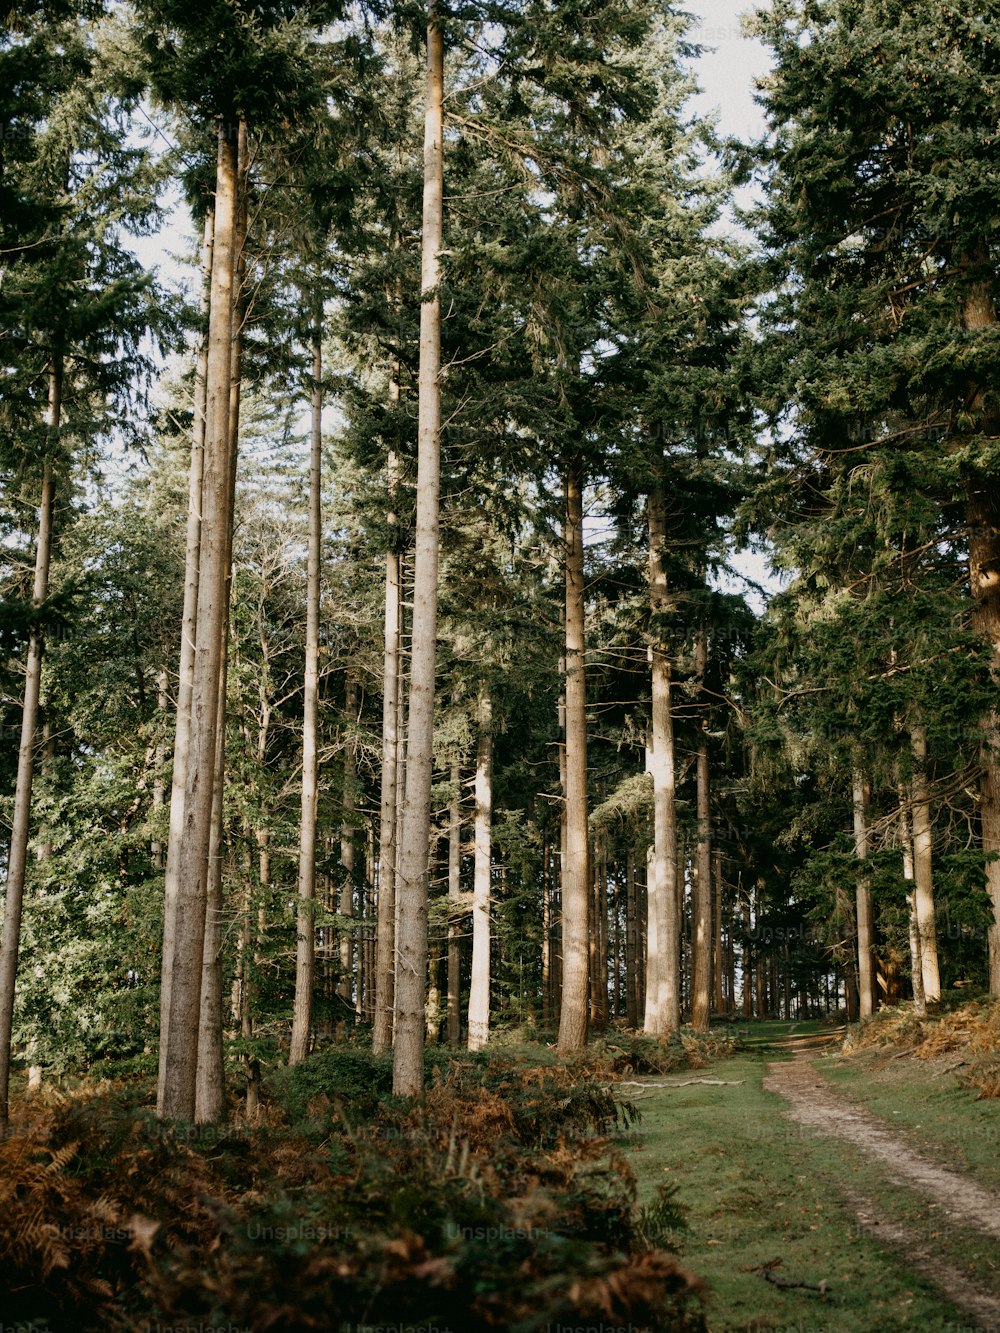 un camino en medio de un bosque con árboles altos